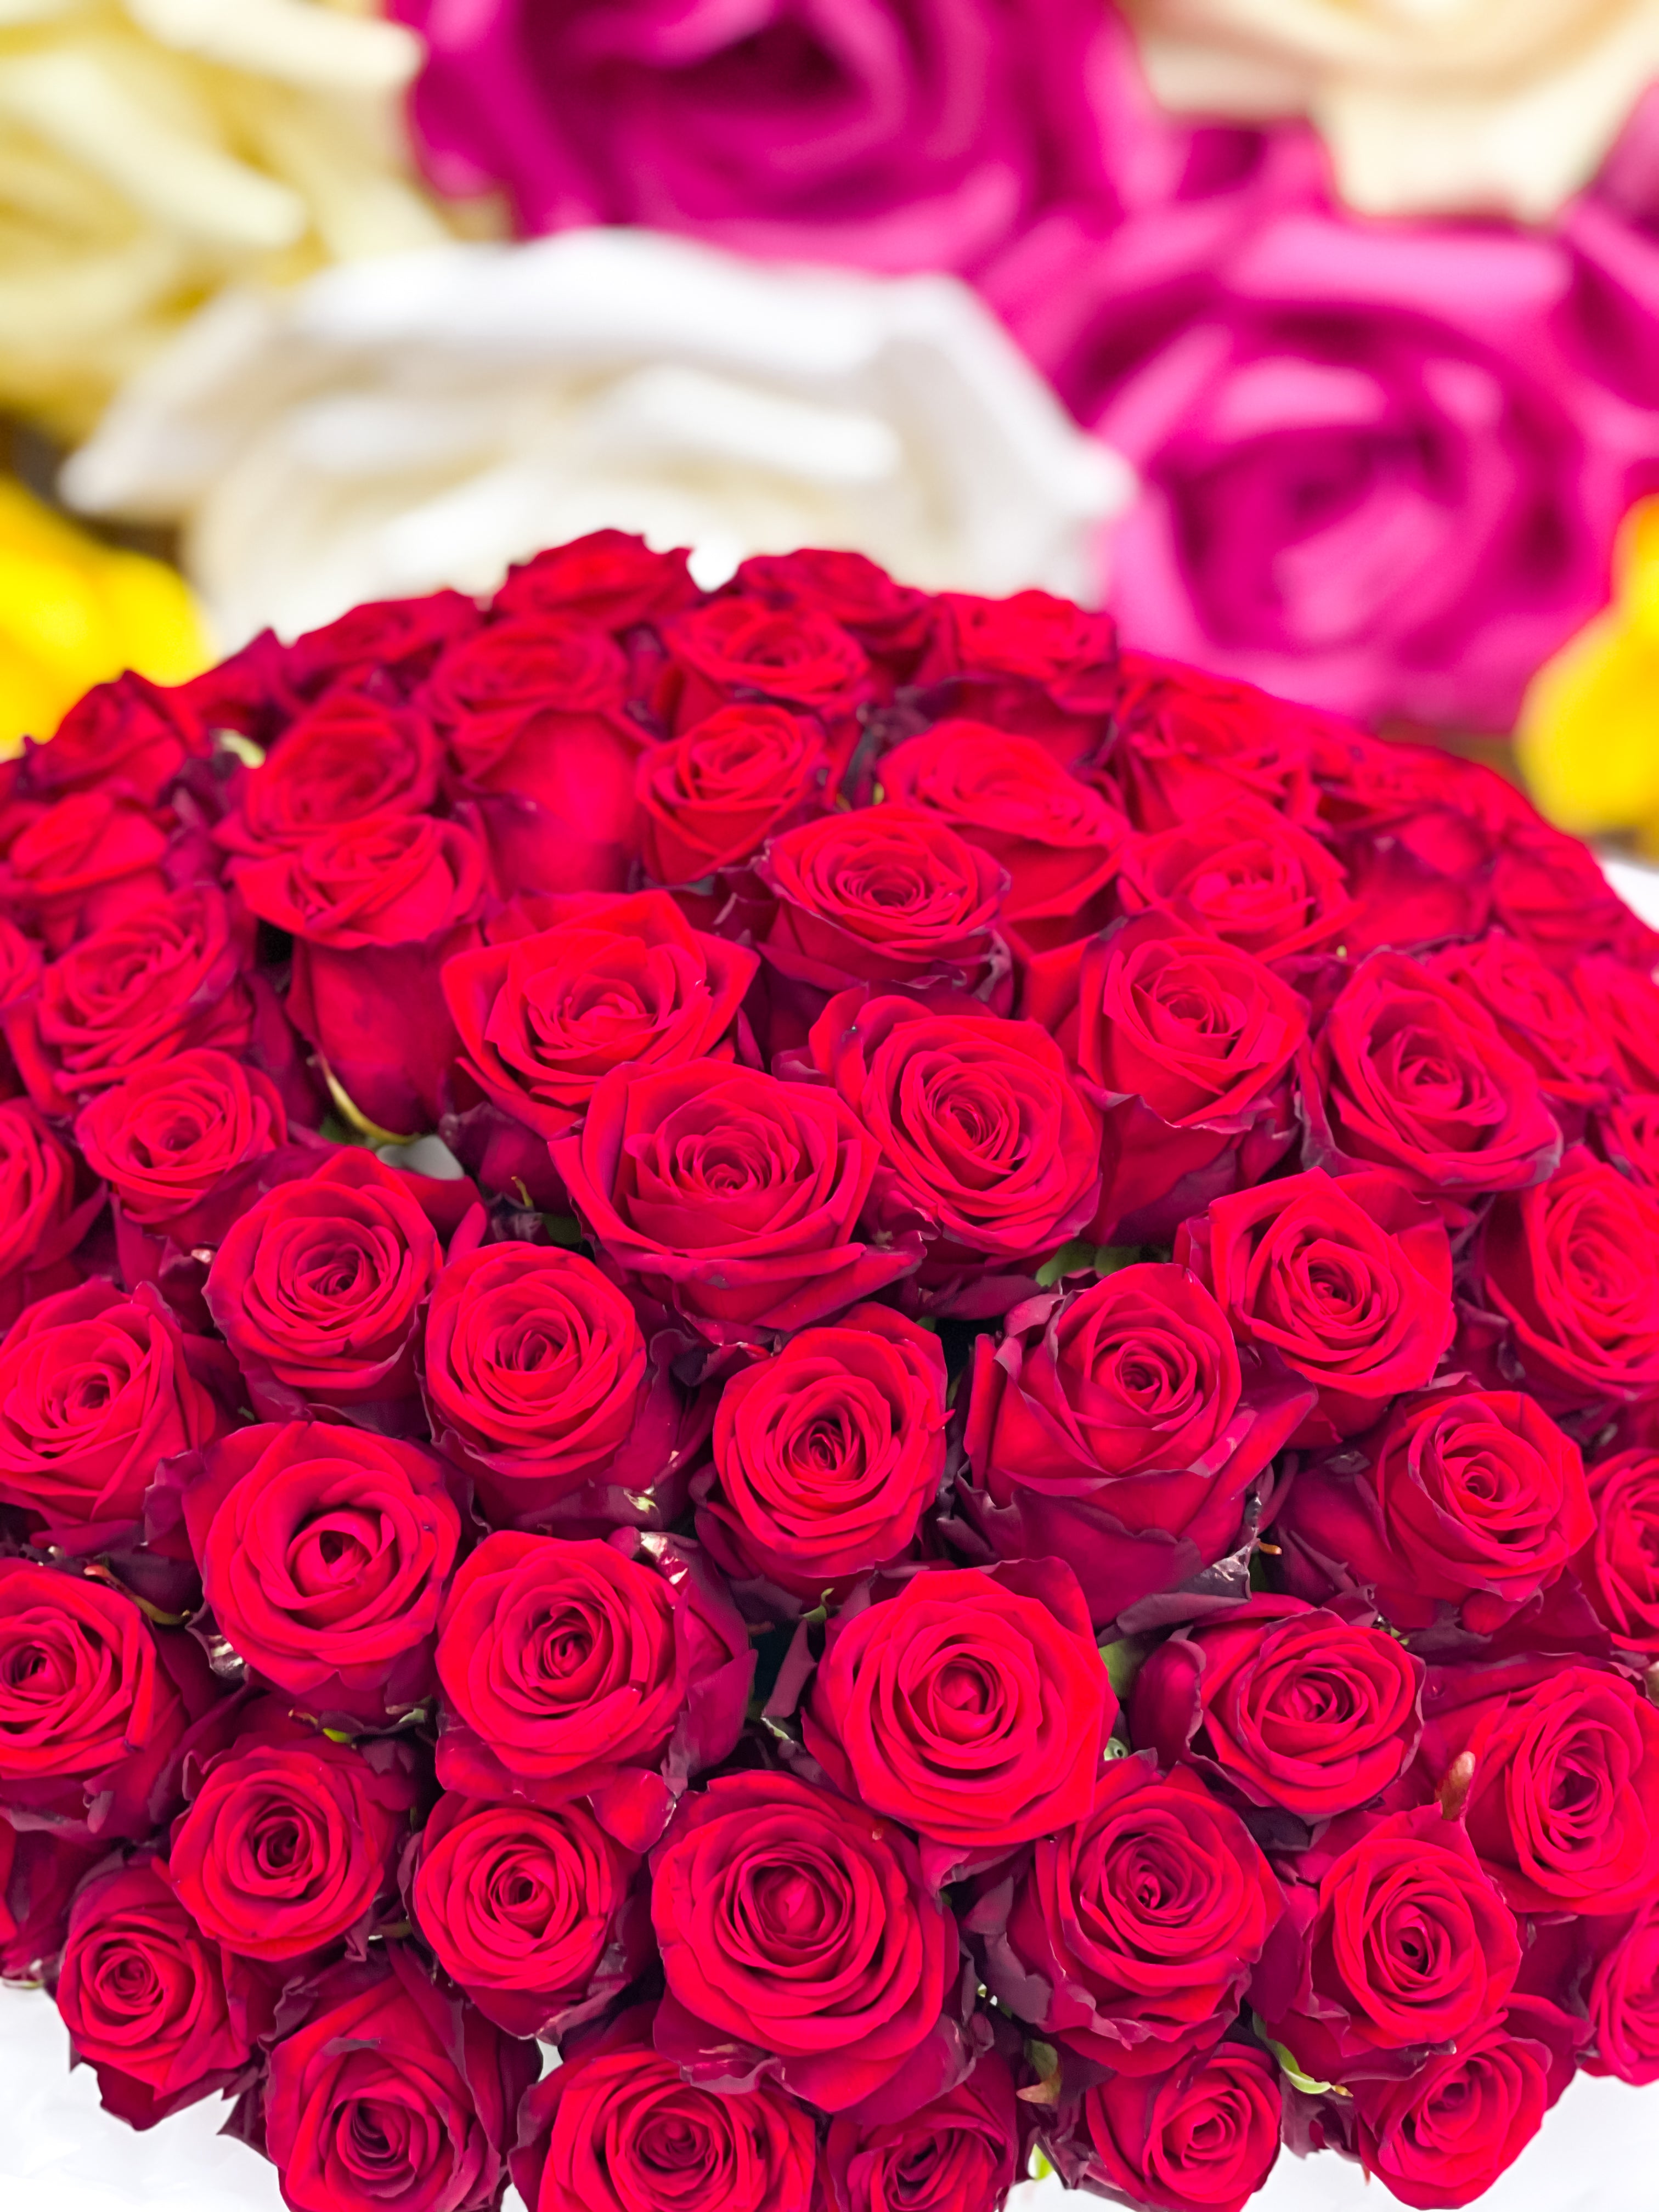 Bouquet 100 Roses frâiches | AvenueFitzgerald